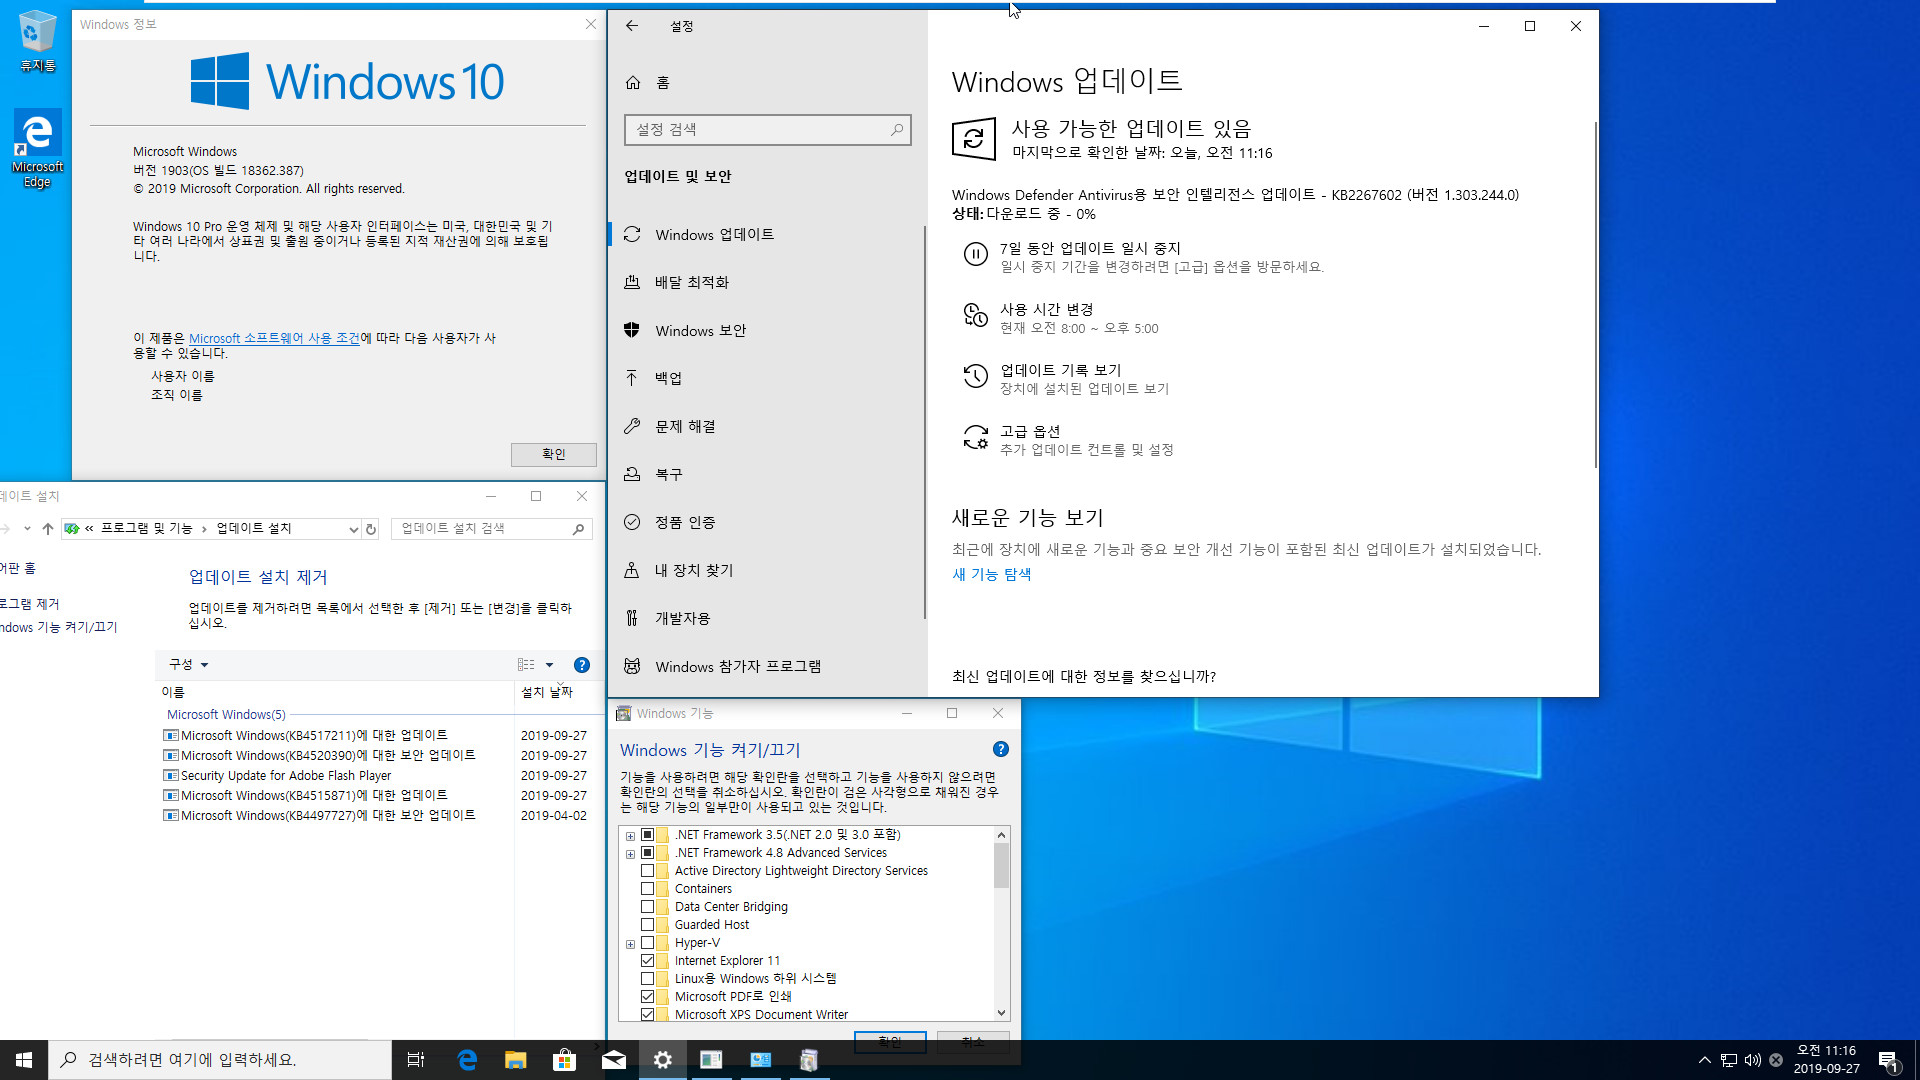 Windows 10 버전 1903 누적 업데이트 KB4517211 (OS 빌드 18362.387) [2019-09-26 일자] 나왔네요 - install.wim 다시 통합중 입니다 - 다행히 닷넷 누적 업데이트 나오지 않네요 - 64비트 확인 2019-09-27_111621.jpg